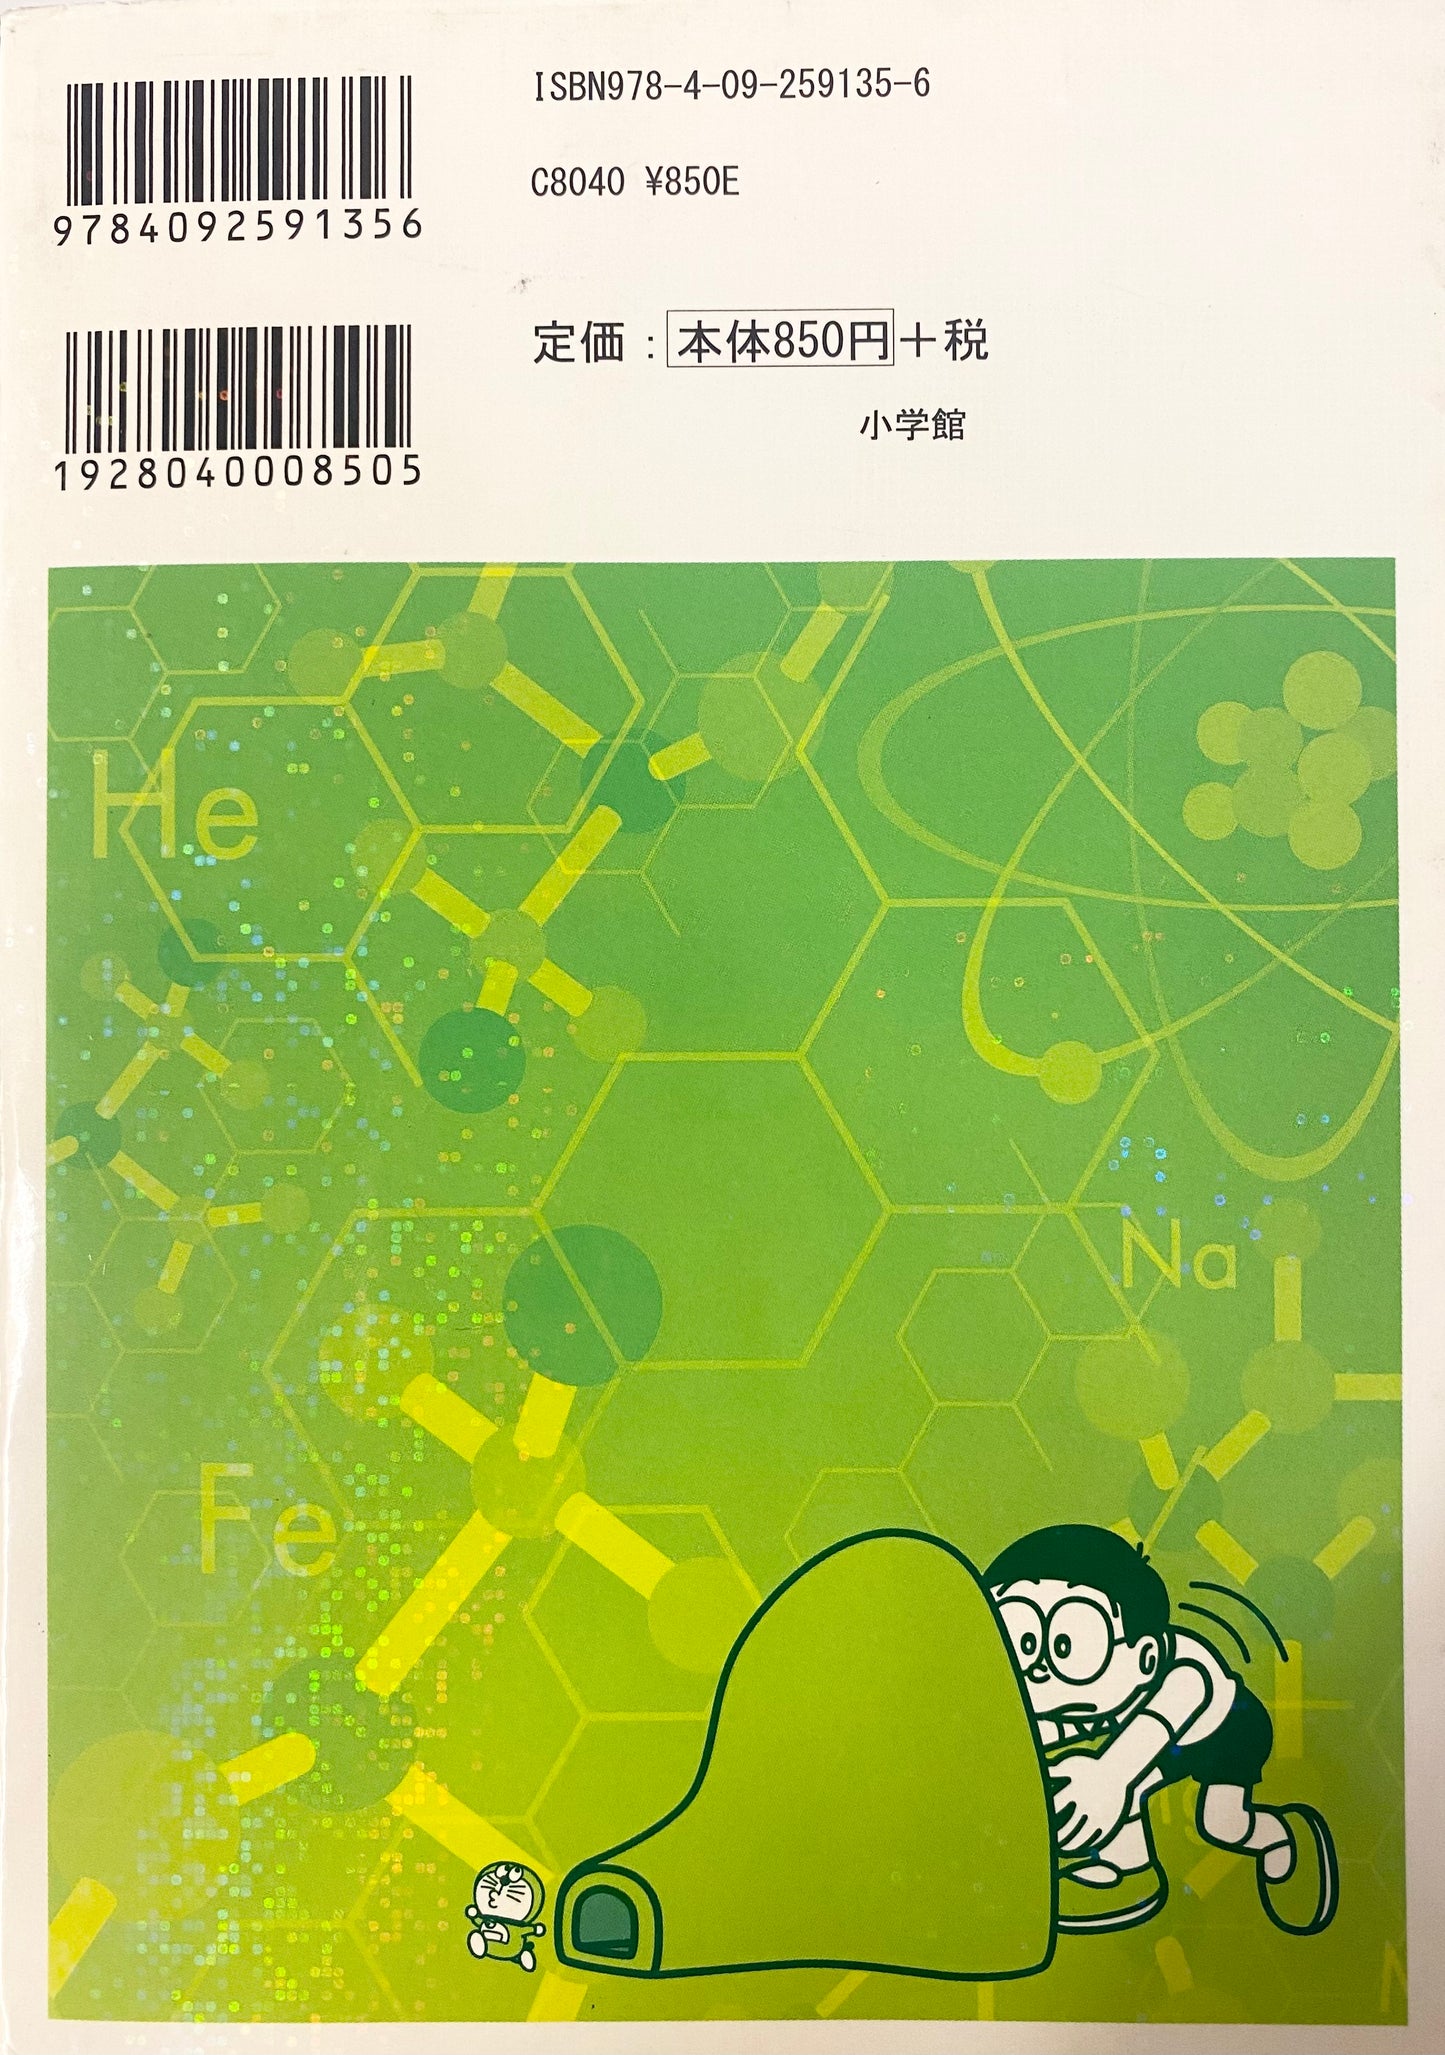 Doraemon Science World-micro world-Official Japanese Edition